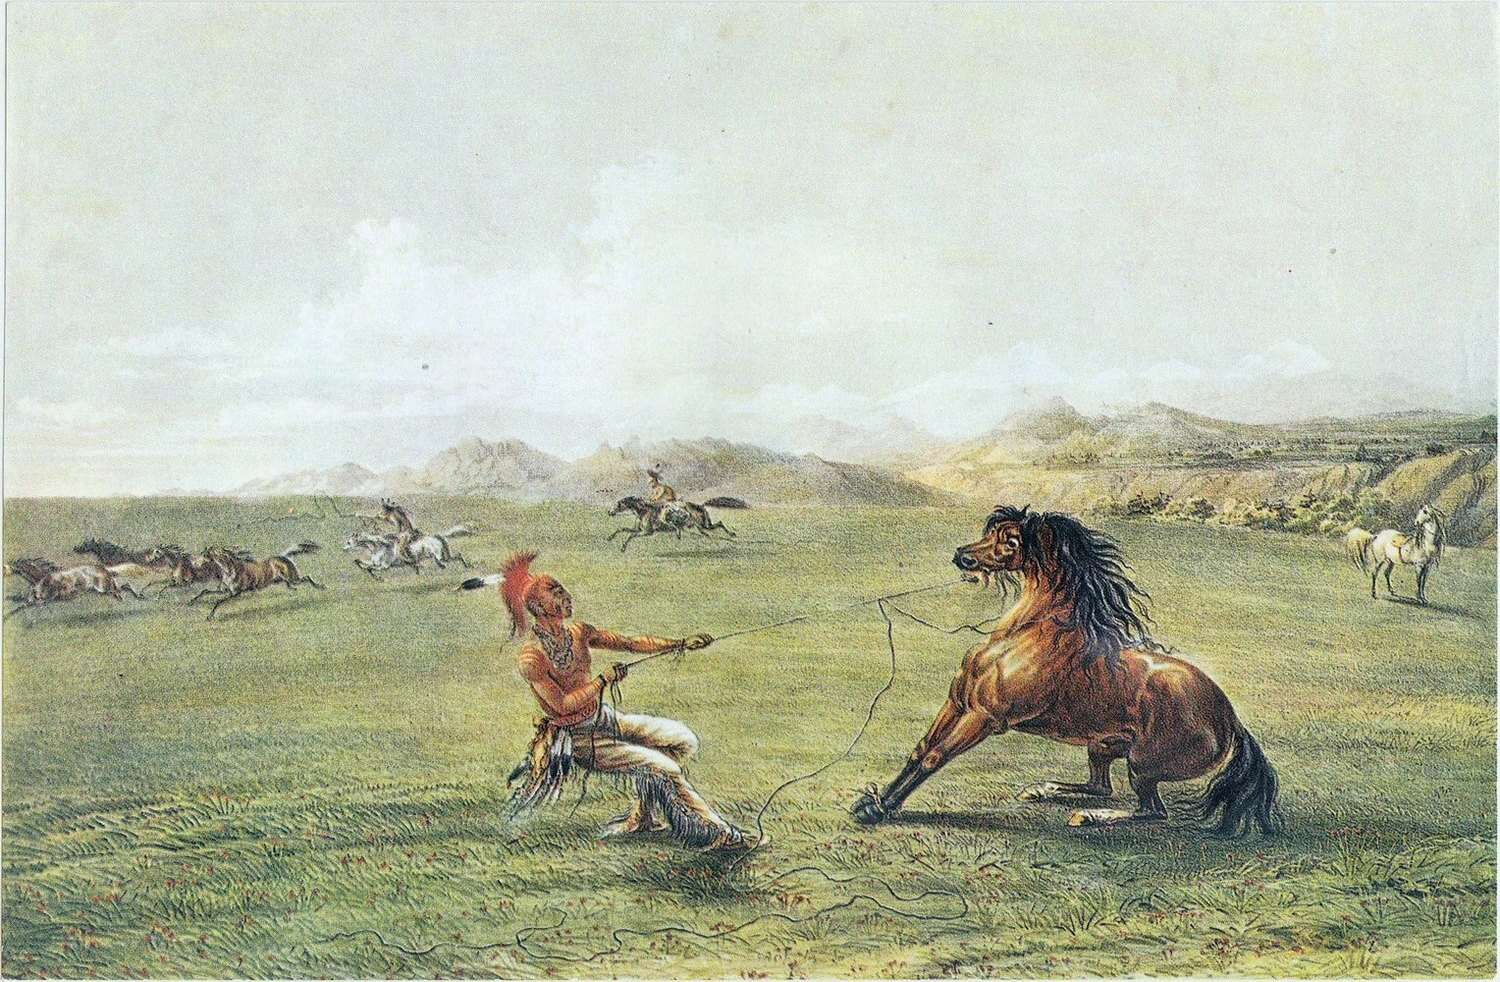 Wild horse catch